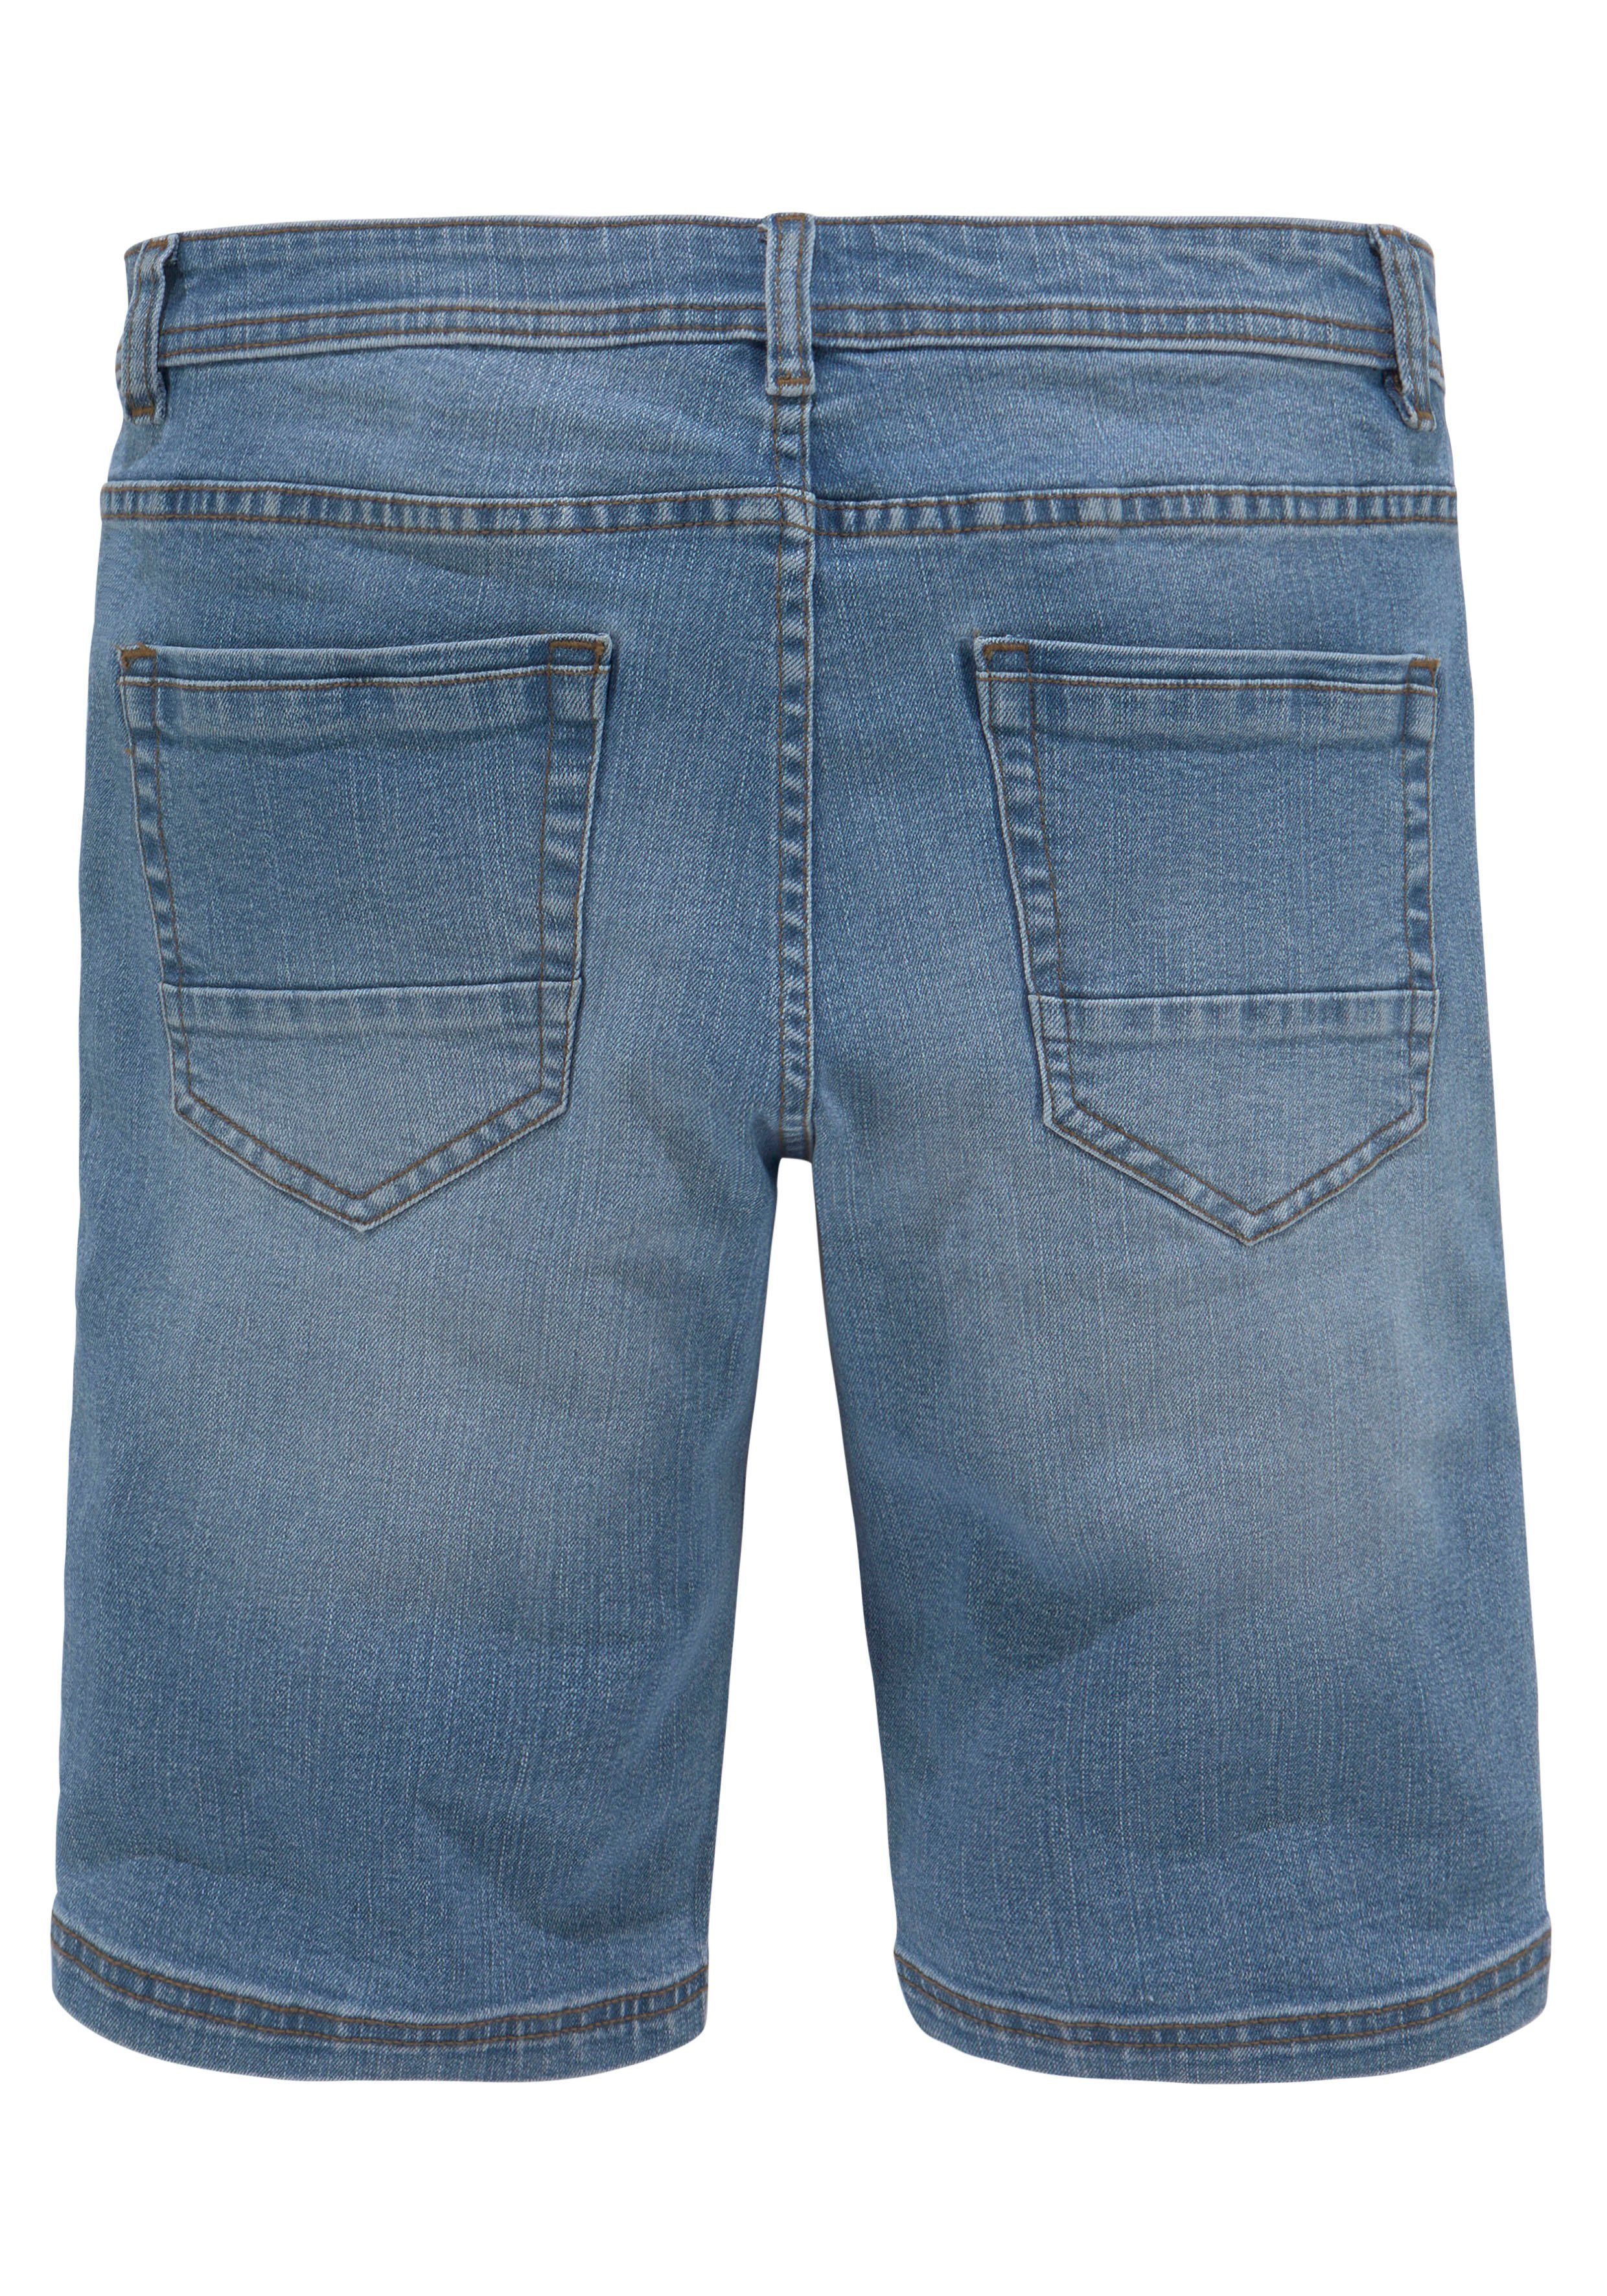 AJC 5-Pocket-Stil blue Shorts im used